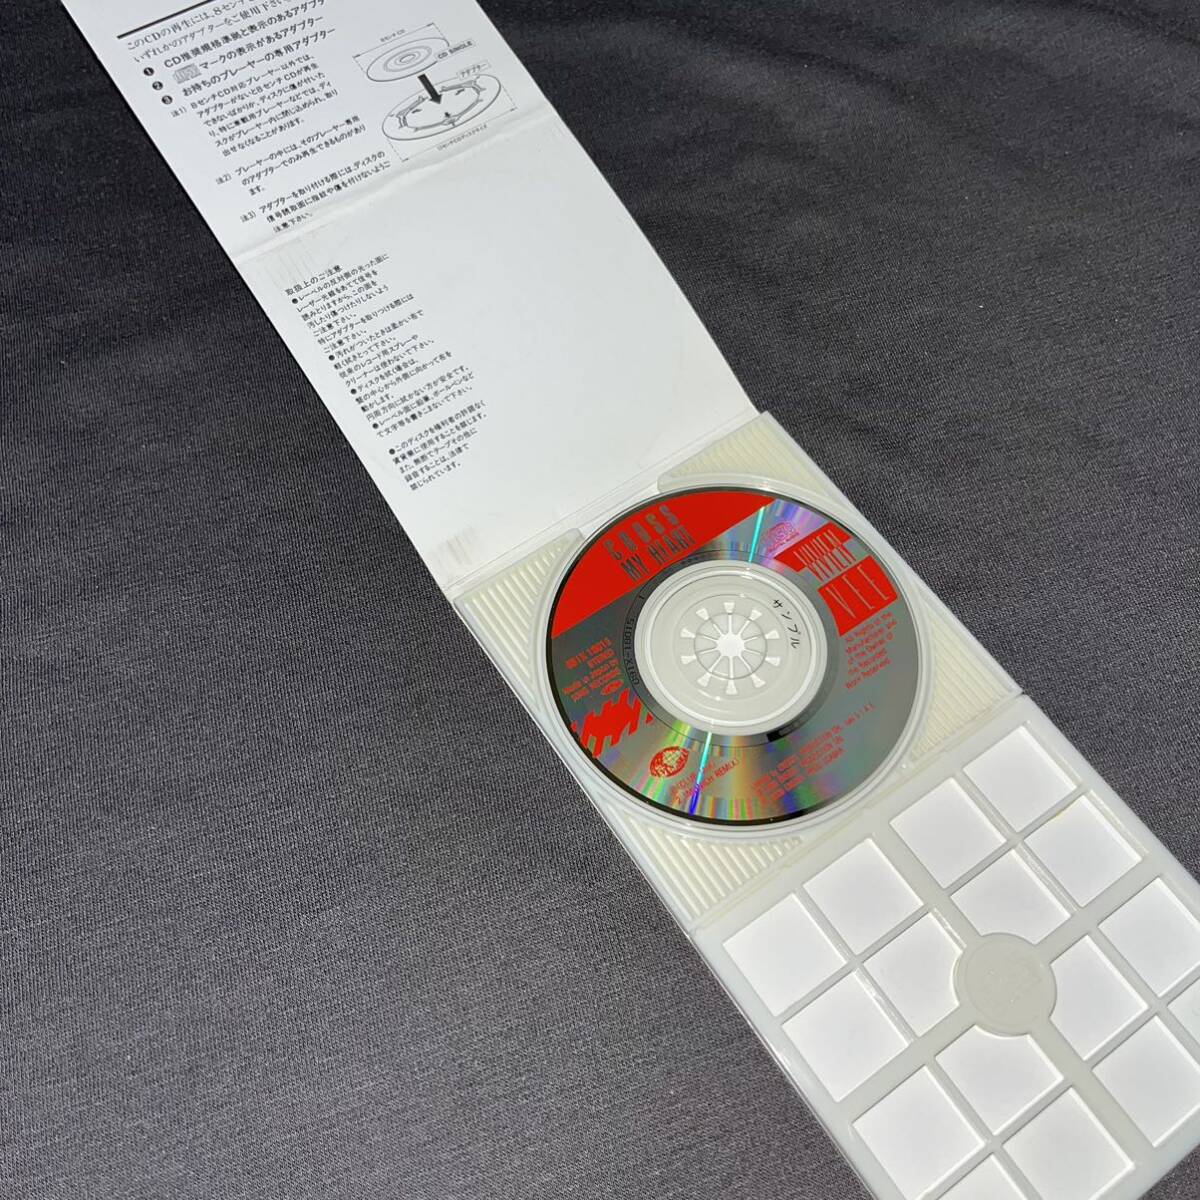 Vivien Vee / Cross My Heart 日本盤 8cm Promo CD (091X 18015) Clio & Kay ヴィヴィアン・ヴィー /クロス・マイ・ハート CDSの画像3